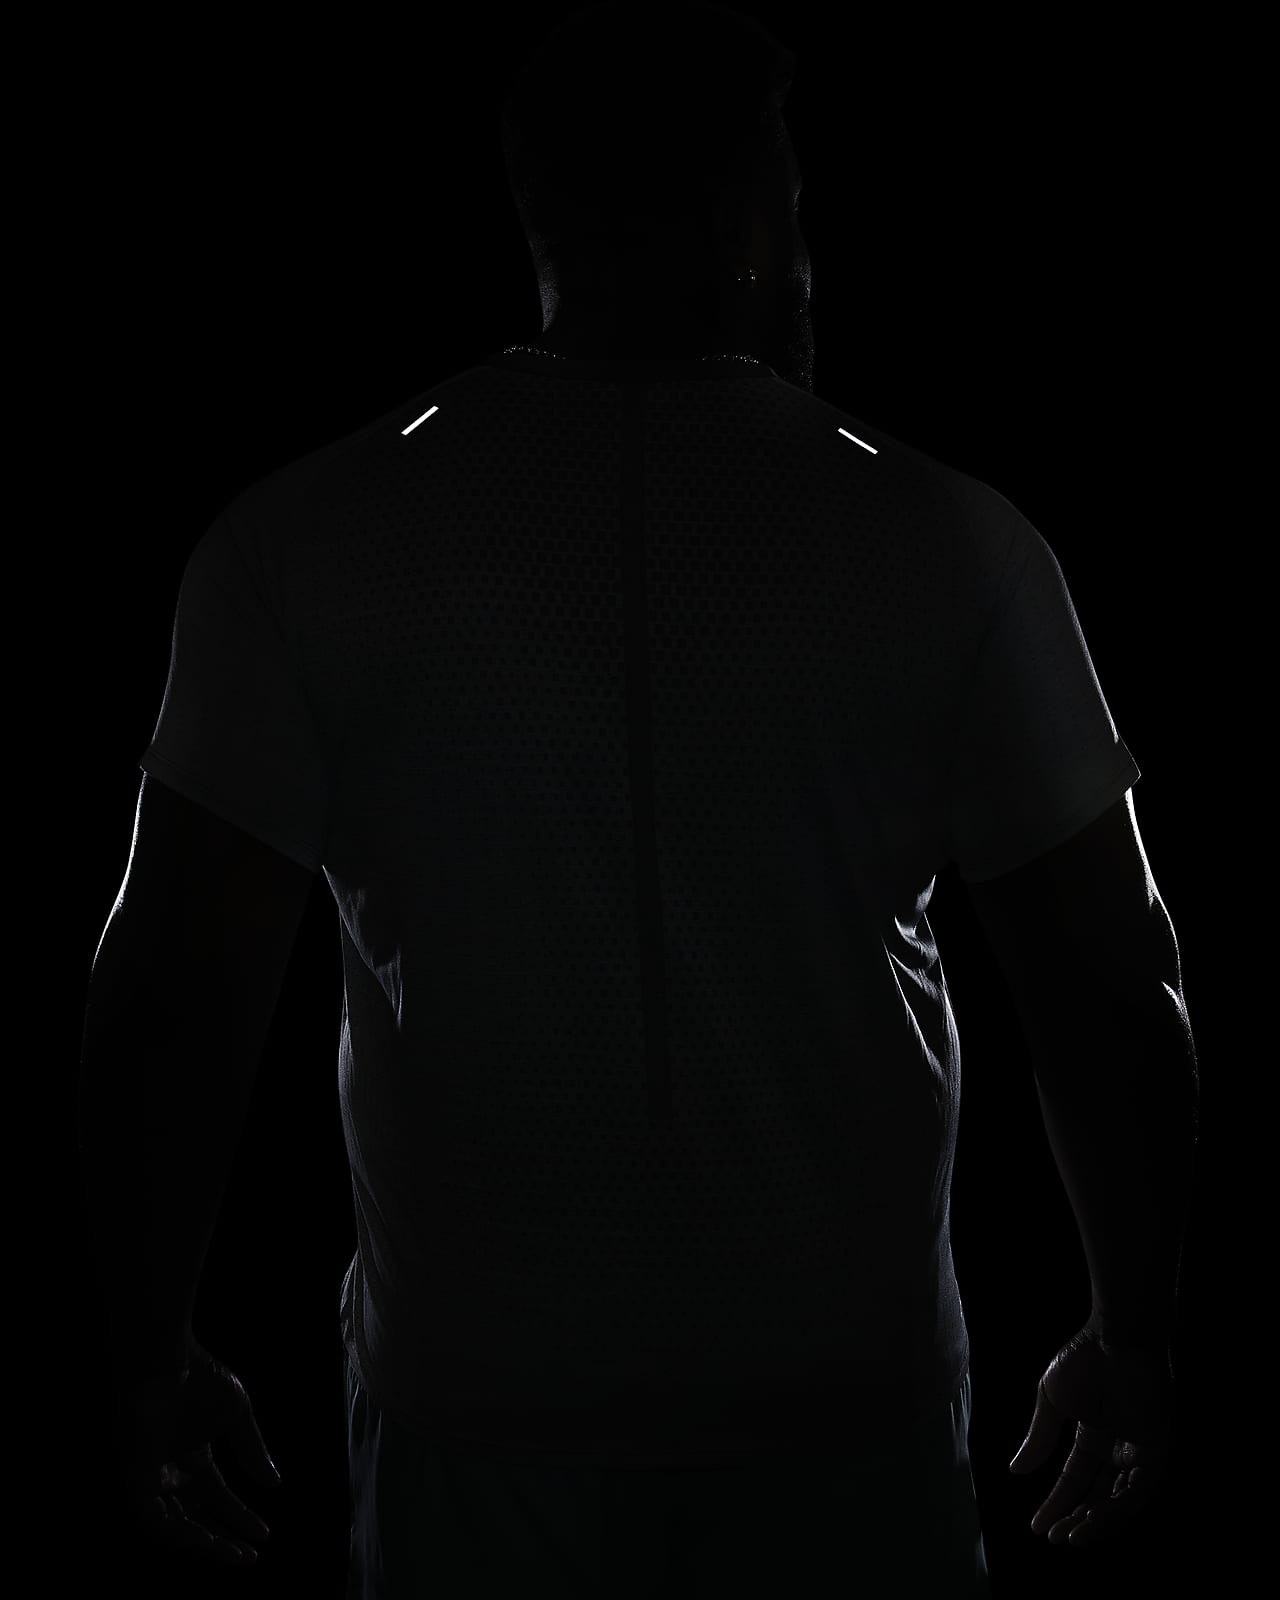 Nike TechKnit Men's Dri-FIT ADV Short-Sleeve Running Top.